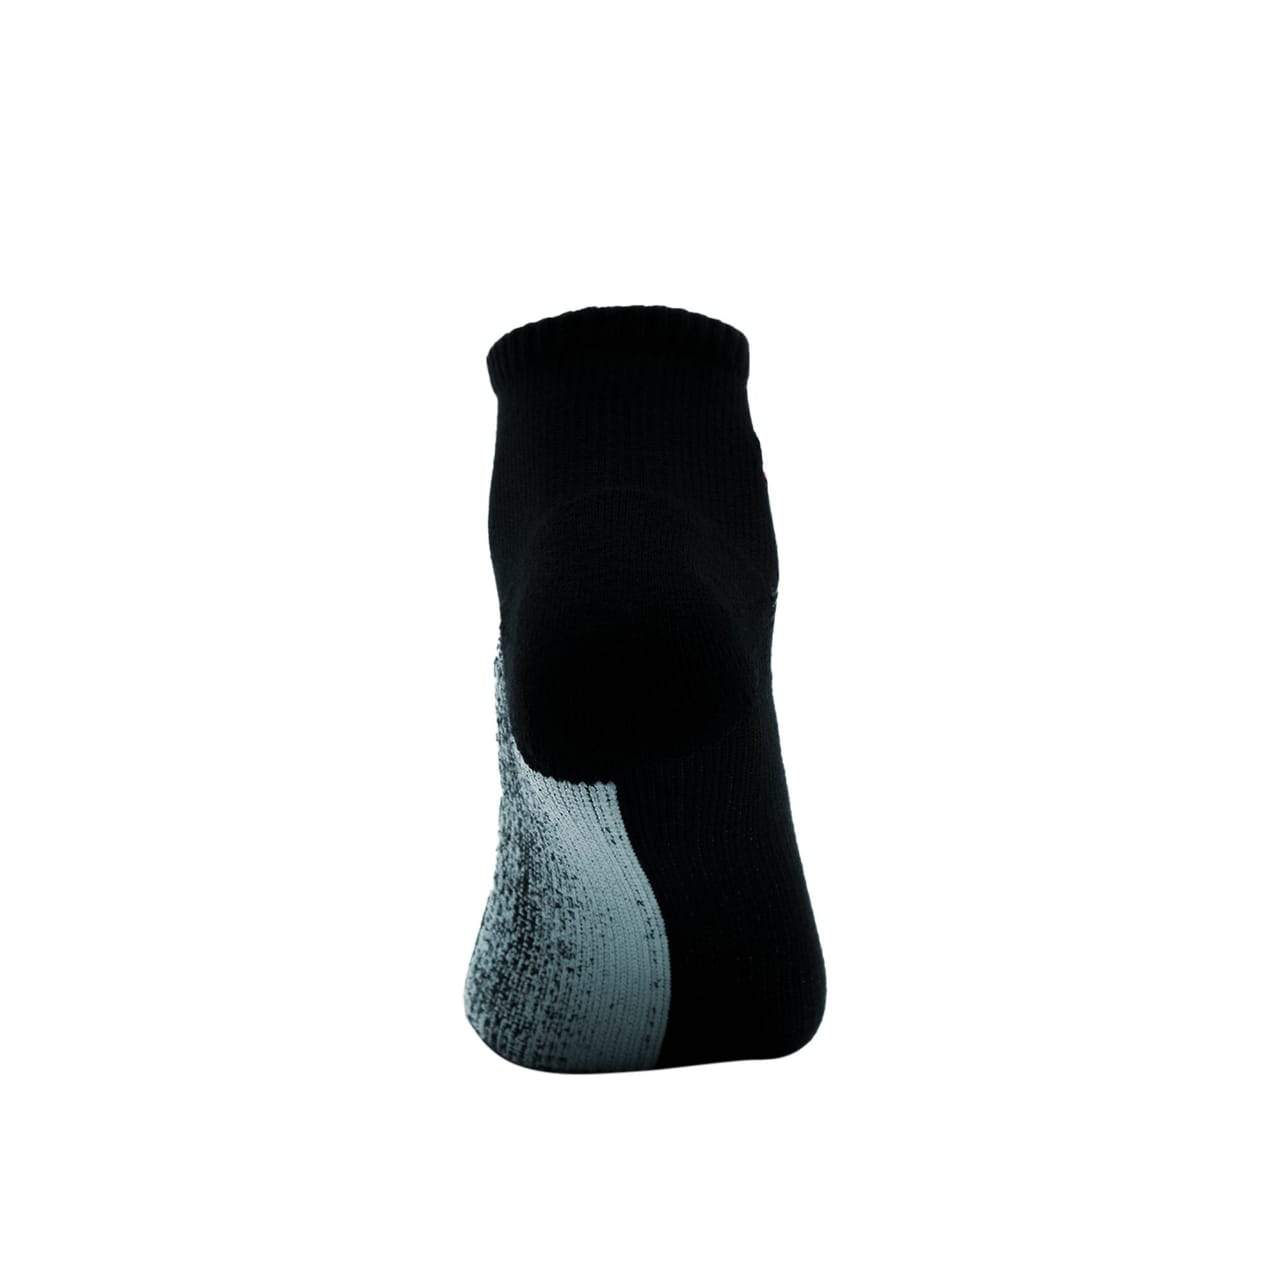 Athletic Quarter Sock 6-Pack in Black athletic socks ArchTek